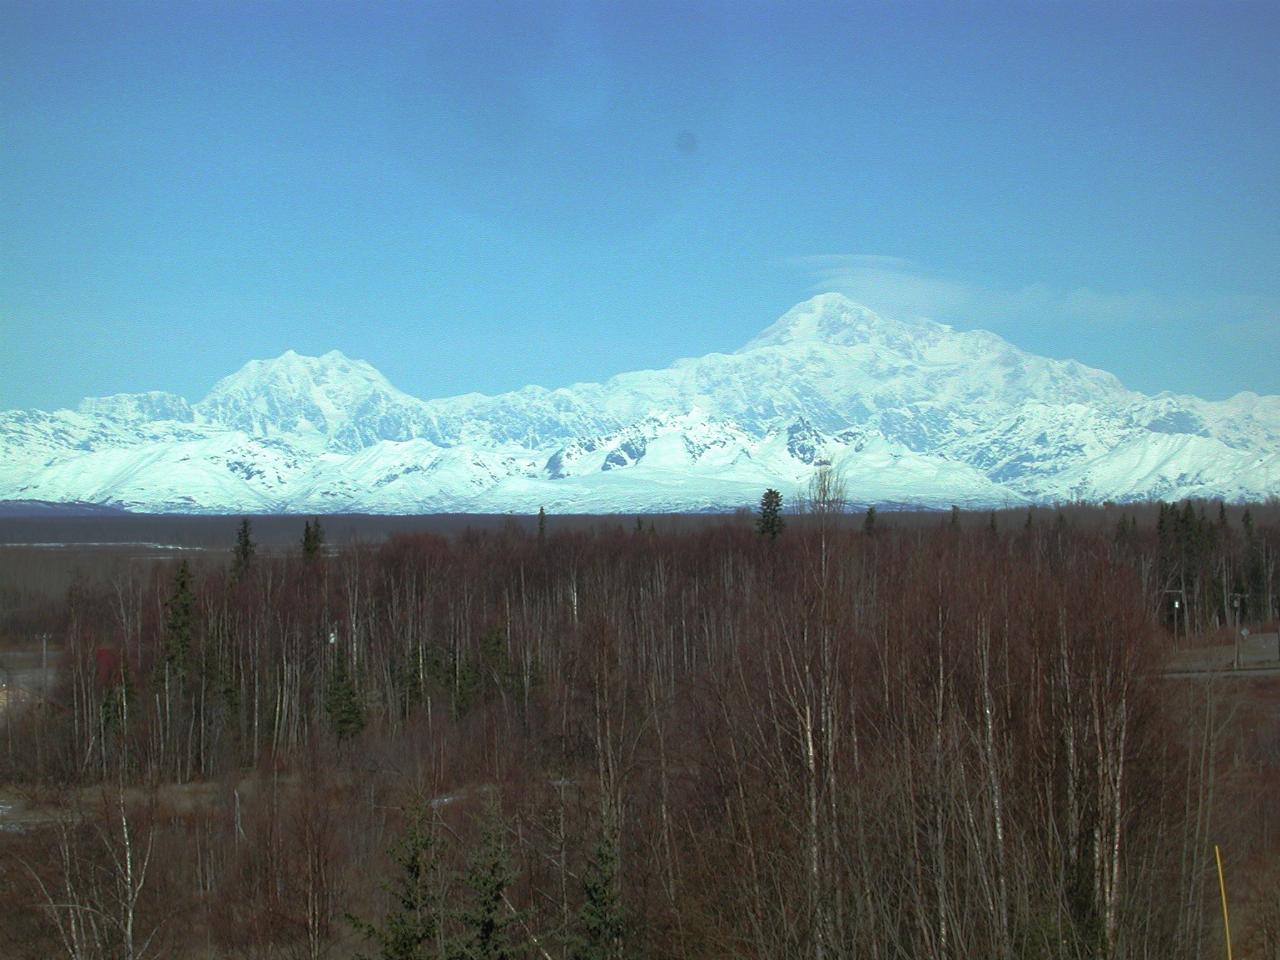 Alaska Range from just before Talkeetna - Mts Hunter and McKinley